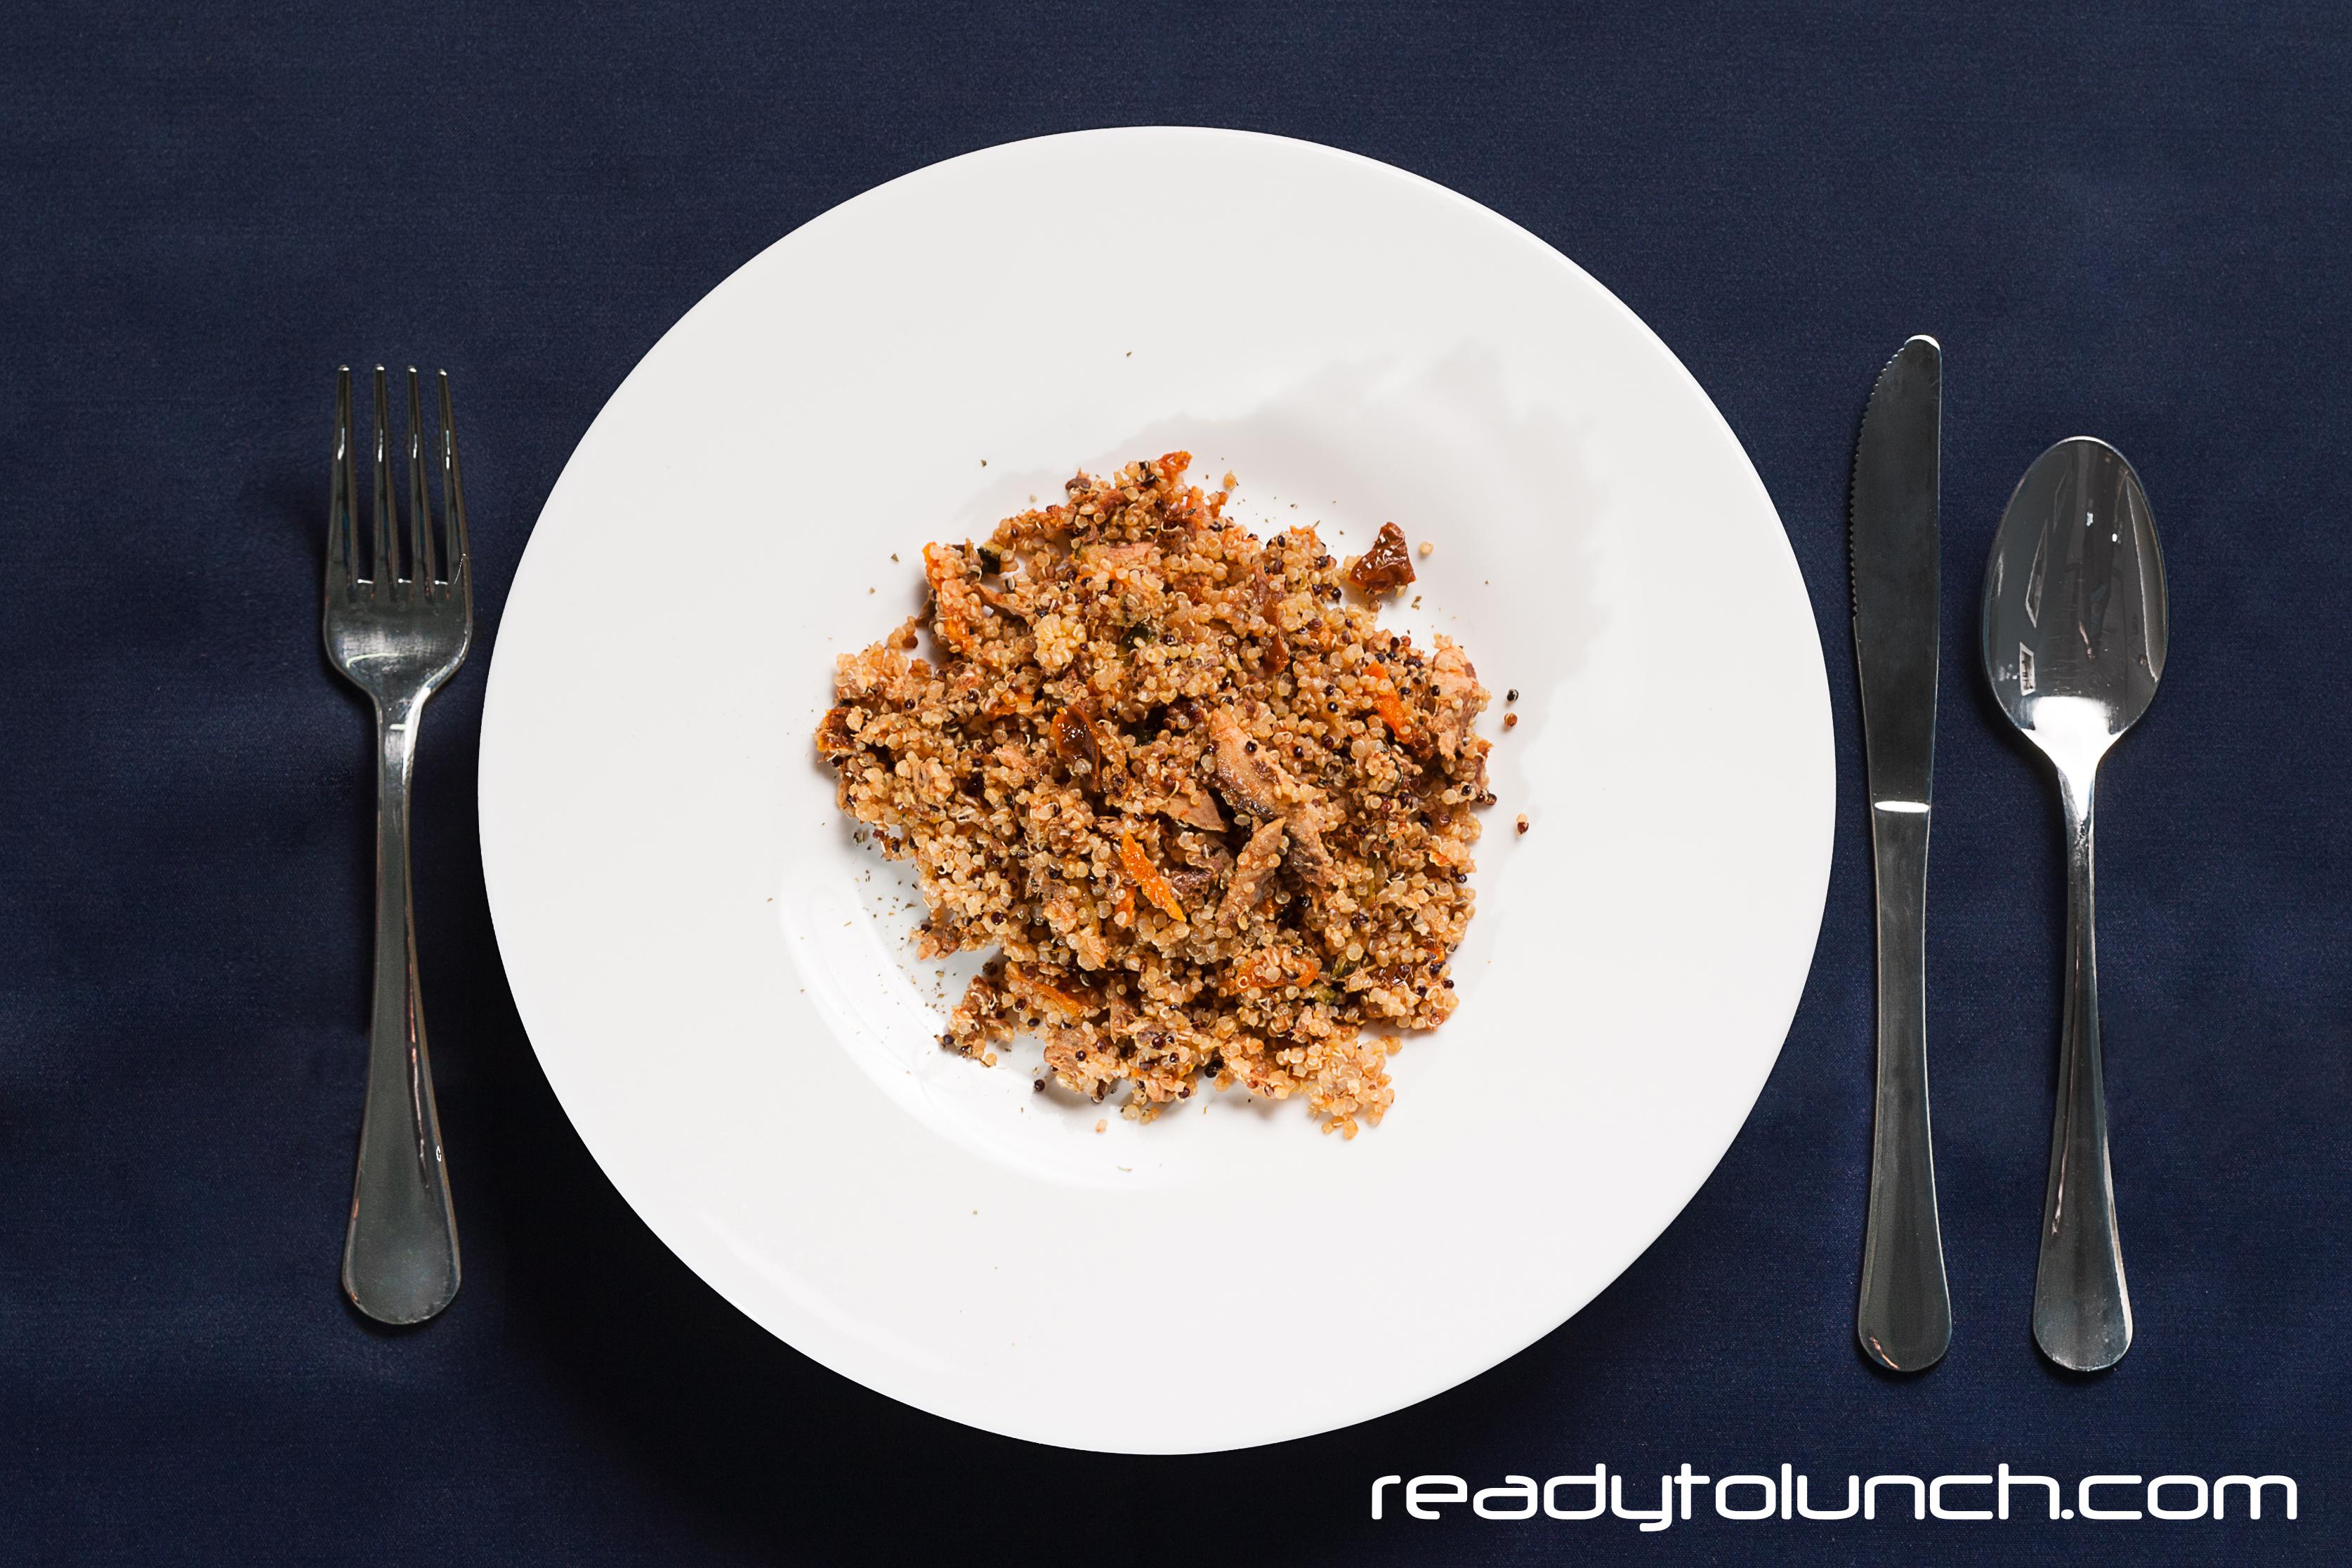 Insalata di quinoa con sgombro e verdure (Credits Argotec - readytolunch.com)